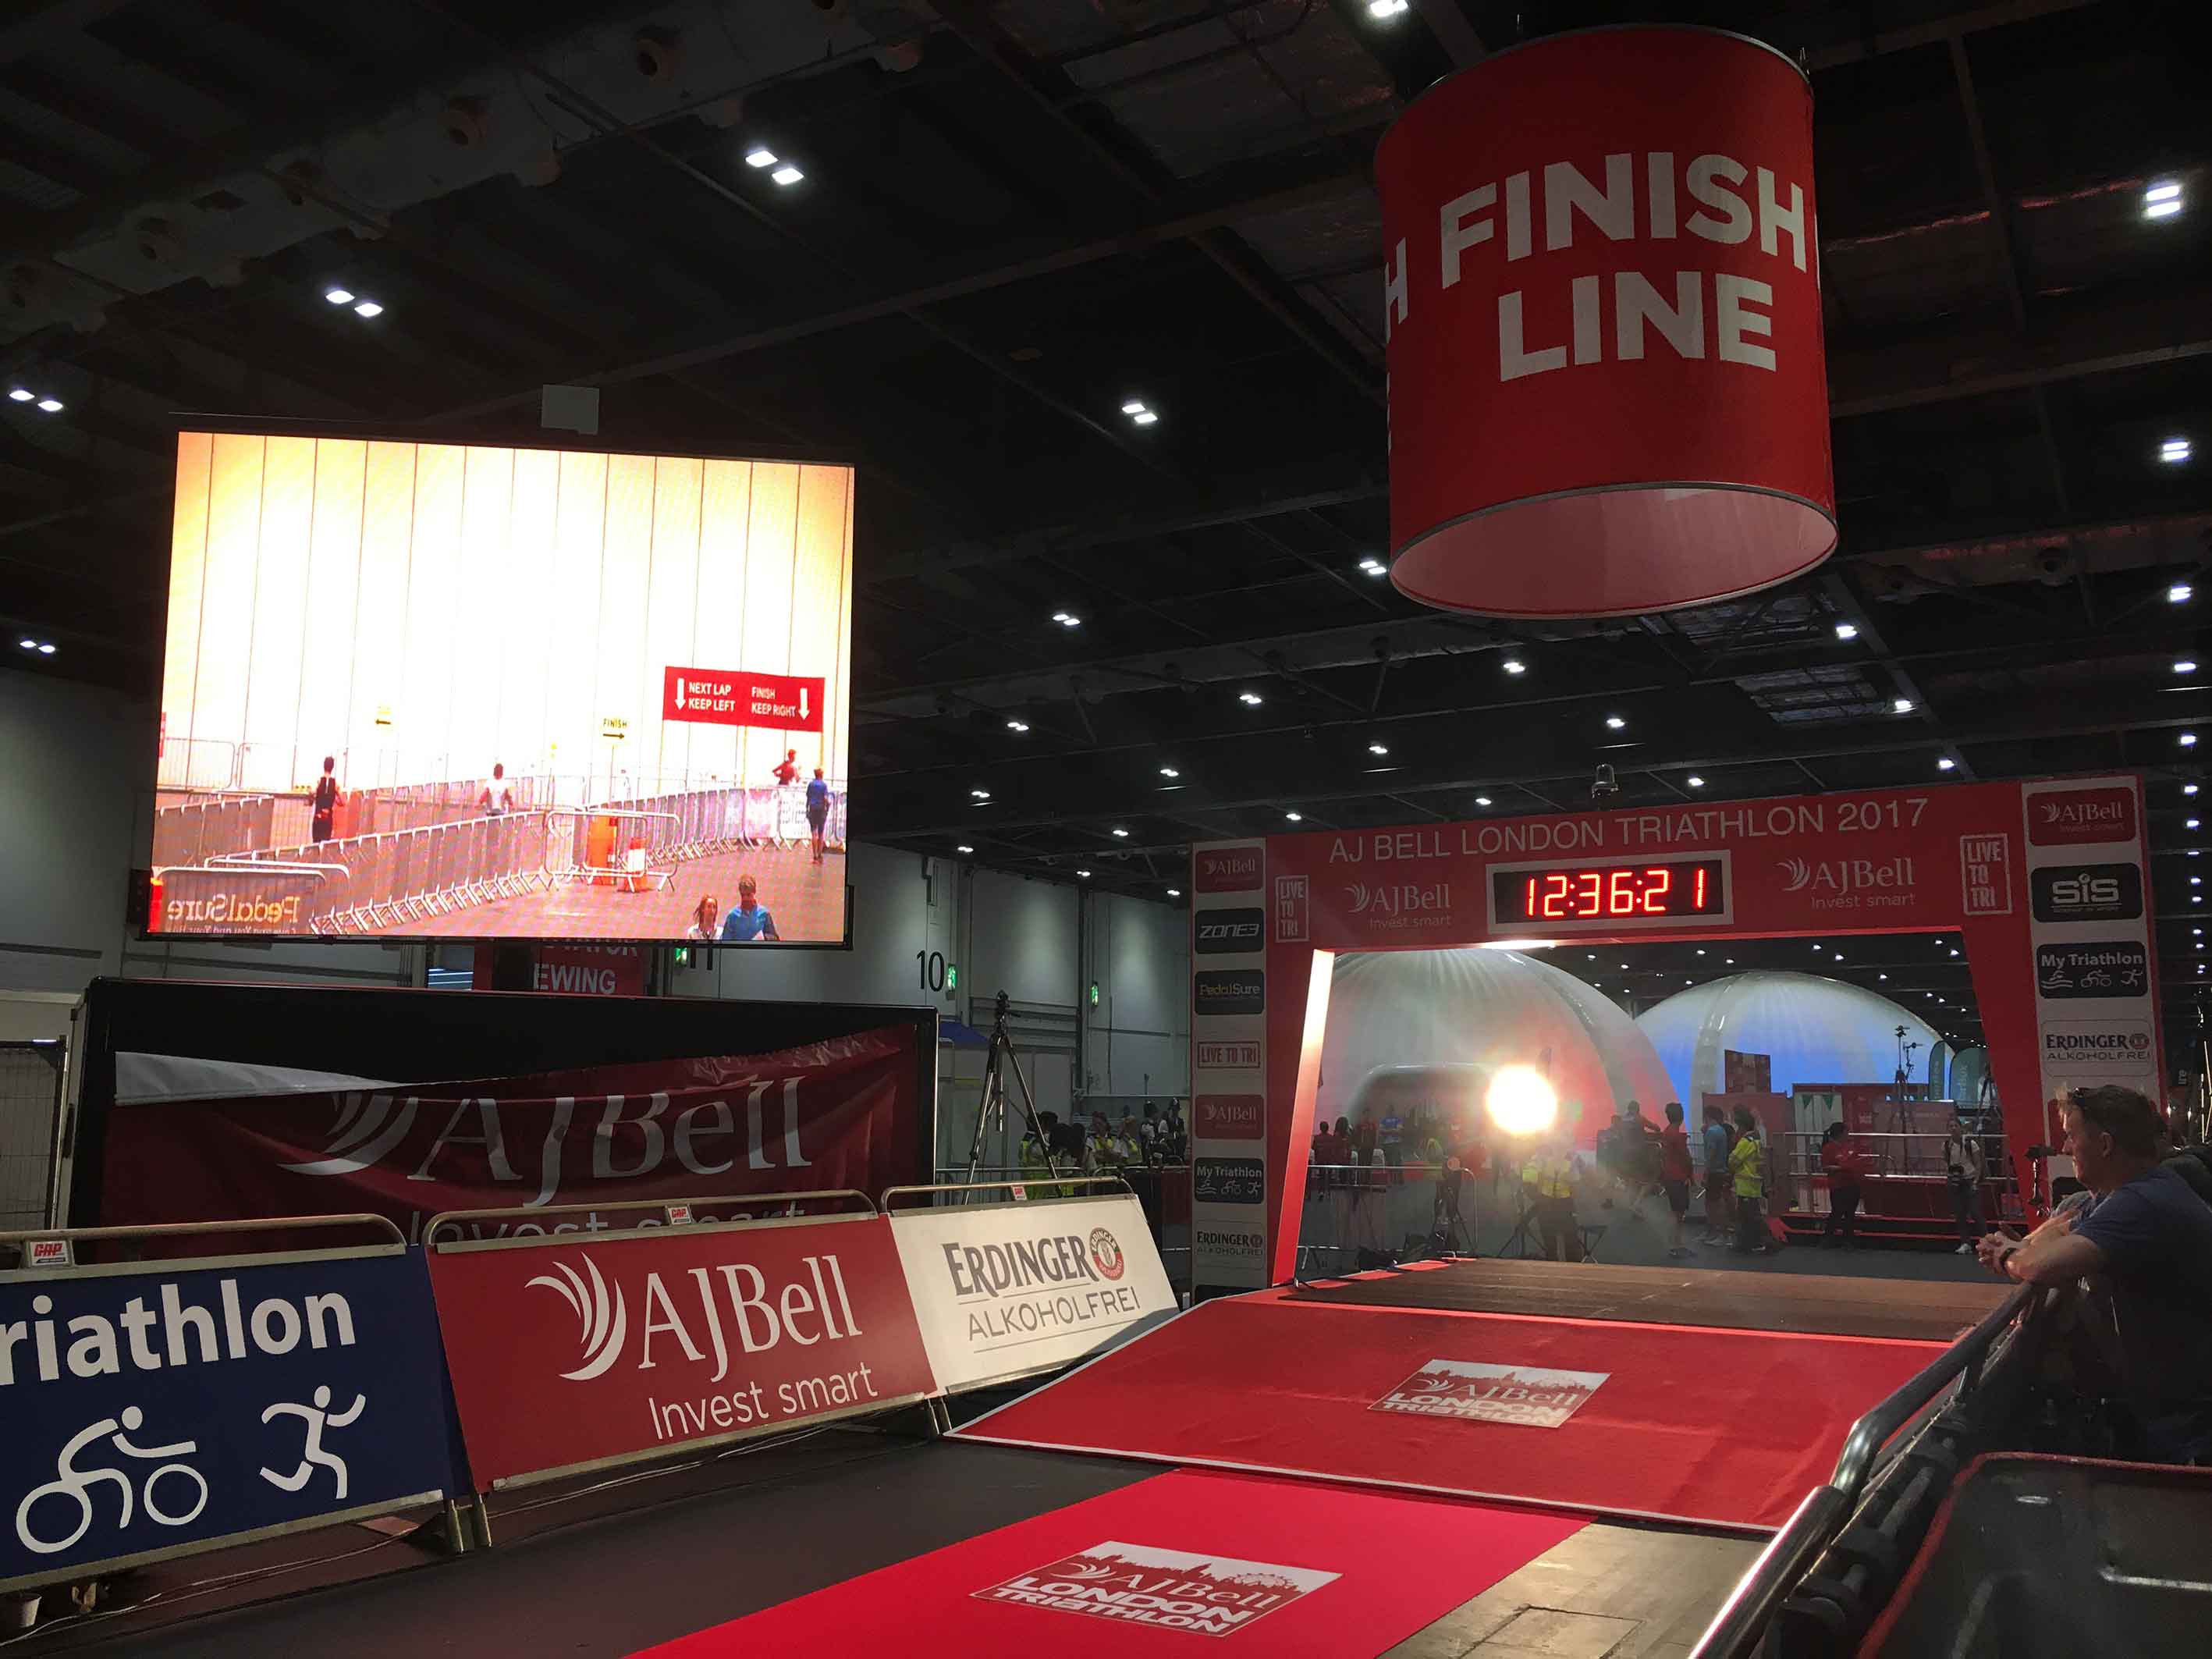 London Triathlon Finish Line